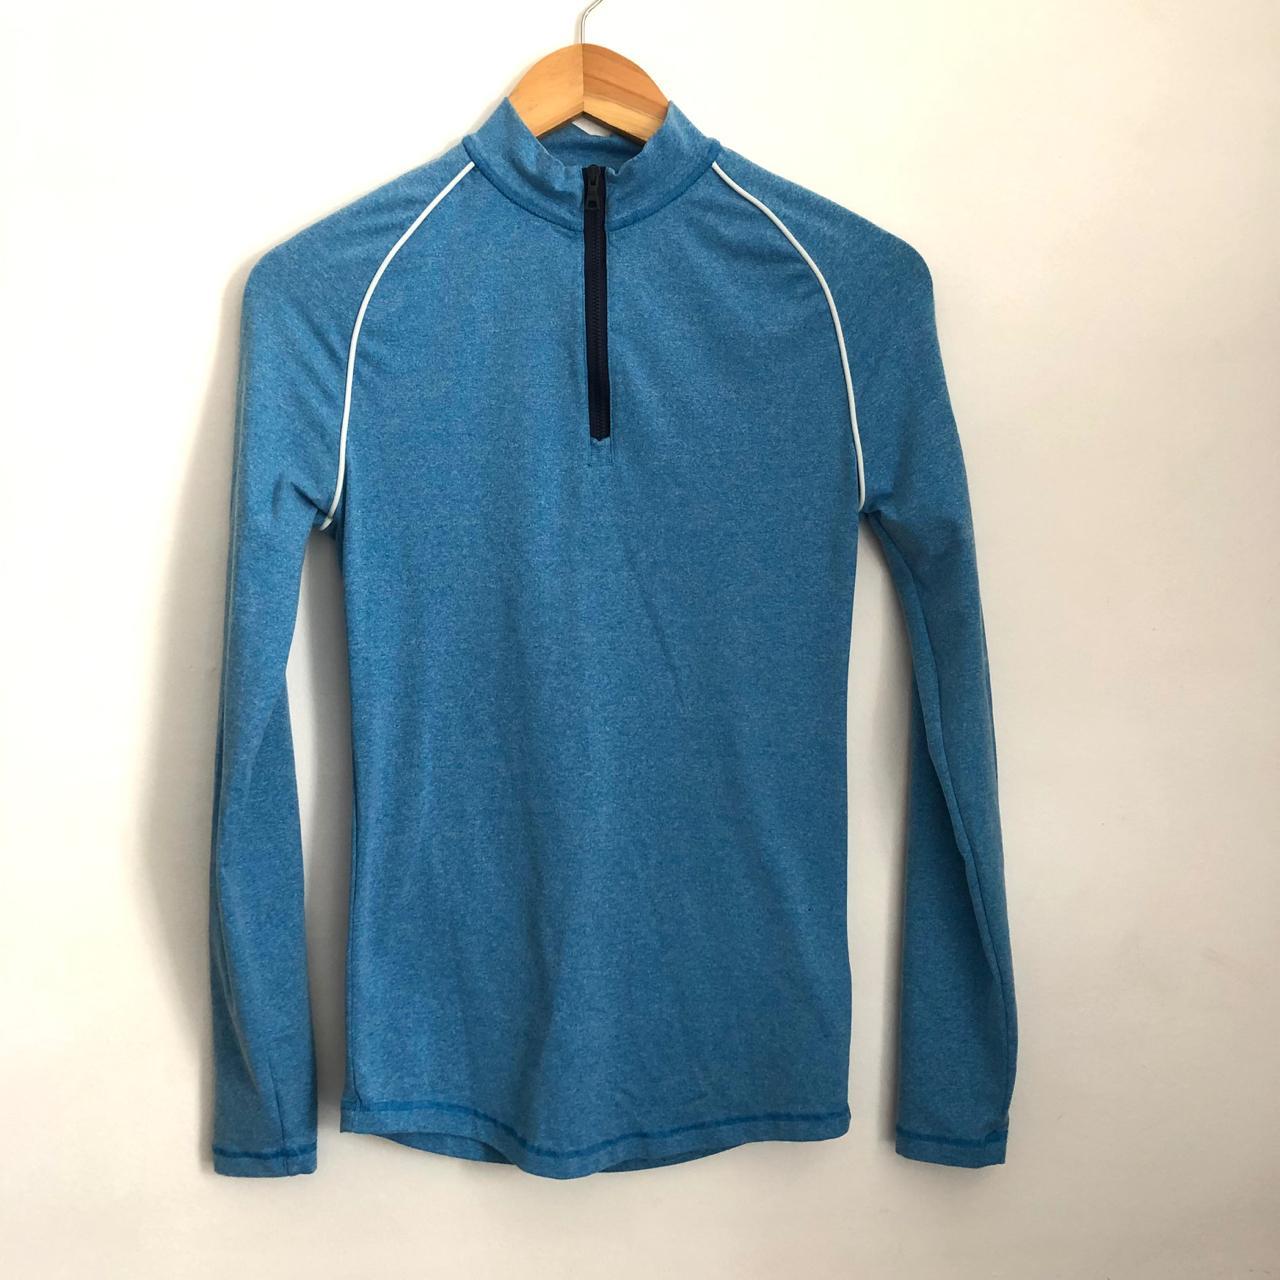 Orlebar Brown Men's Blue Sweatshirt